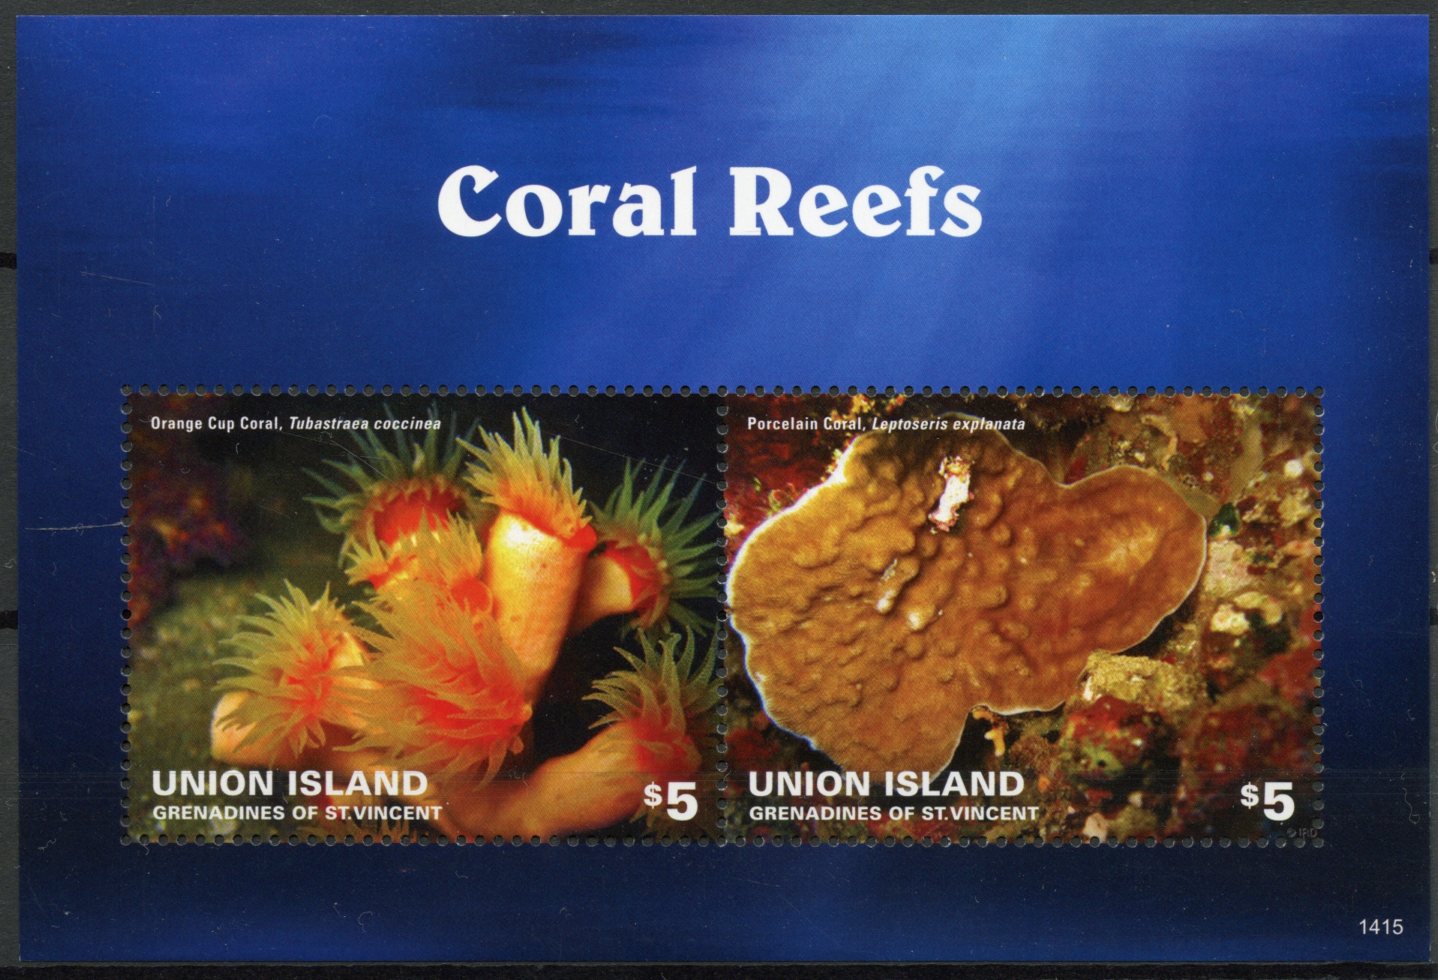 Union Island Grenadines St Vincent 2014 MNH Coral Reefs 2v S/S Marine Orange Cup